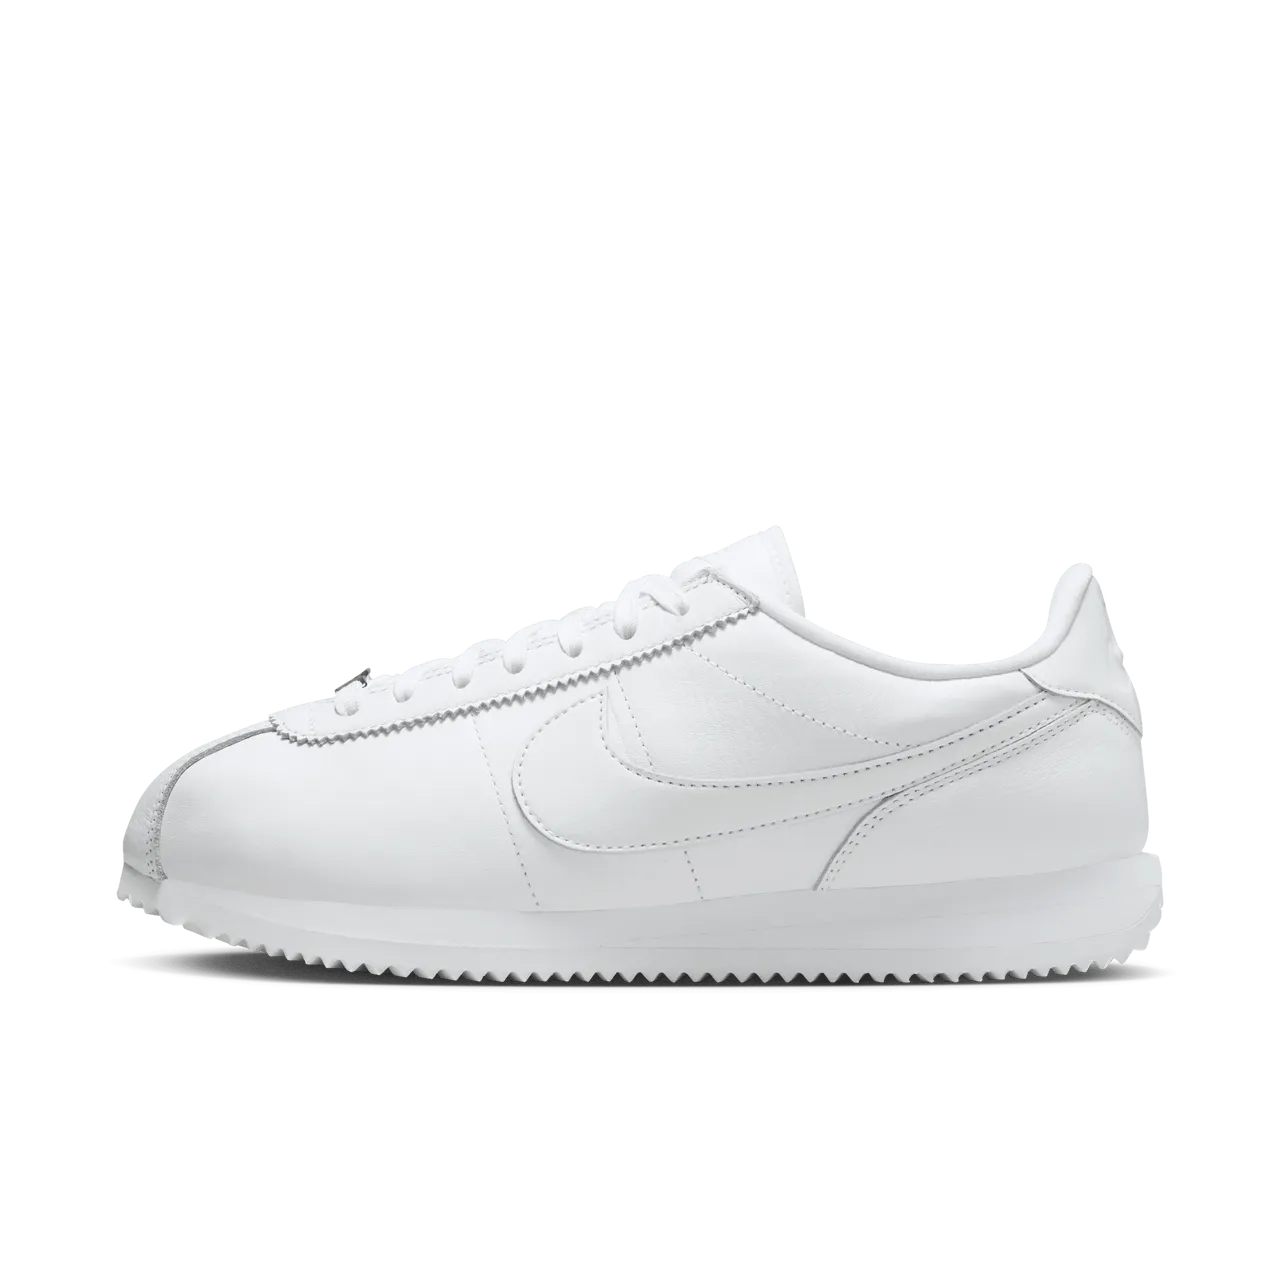 Nike Cortez 23 Premium Leather Women's Shoes - White - Leather